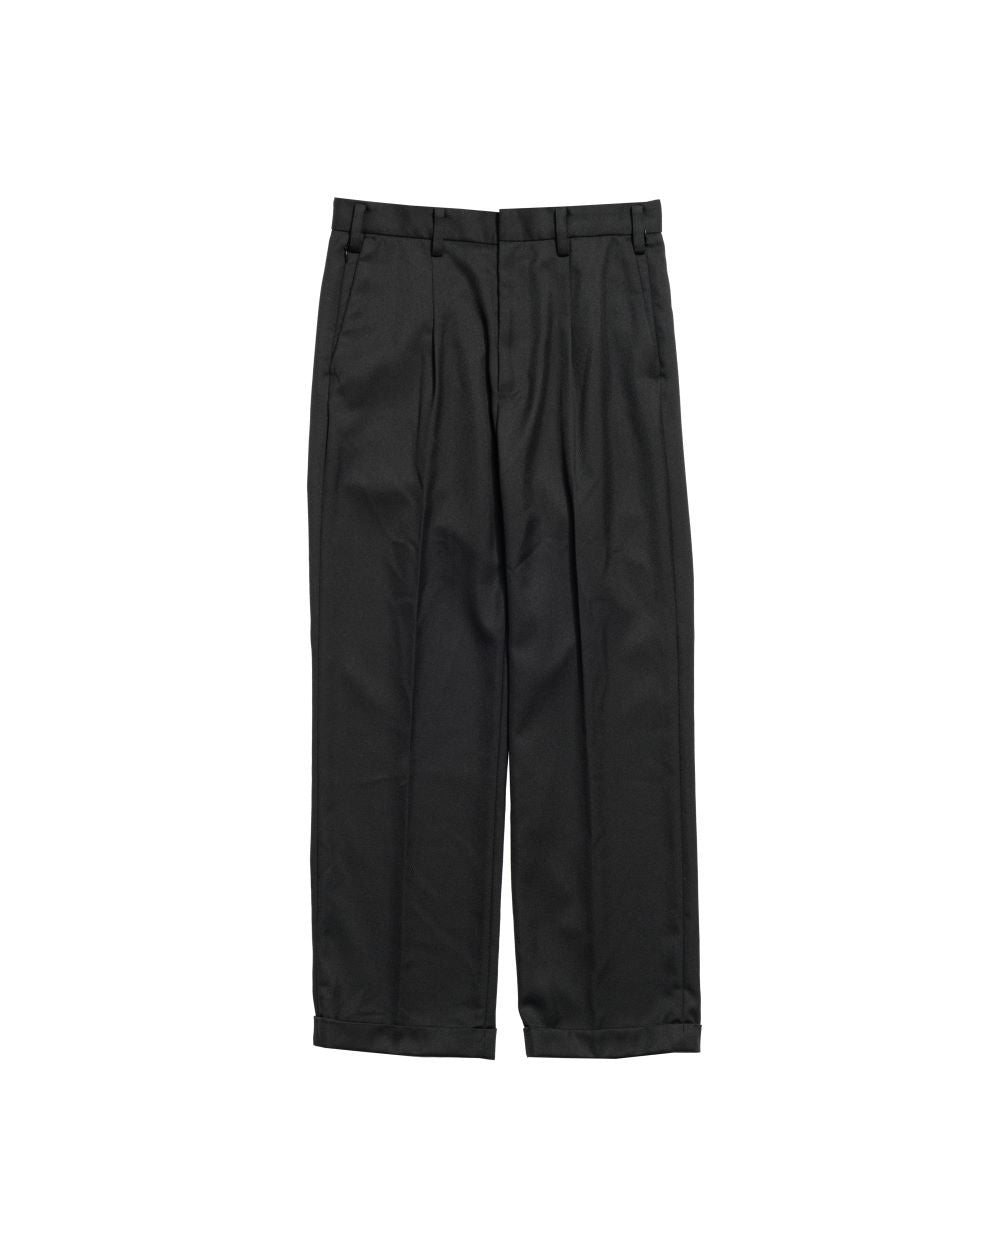 T/W Trousers[BLACK]